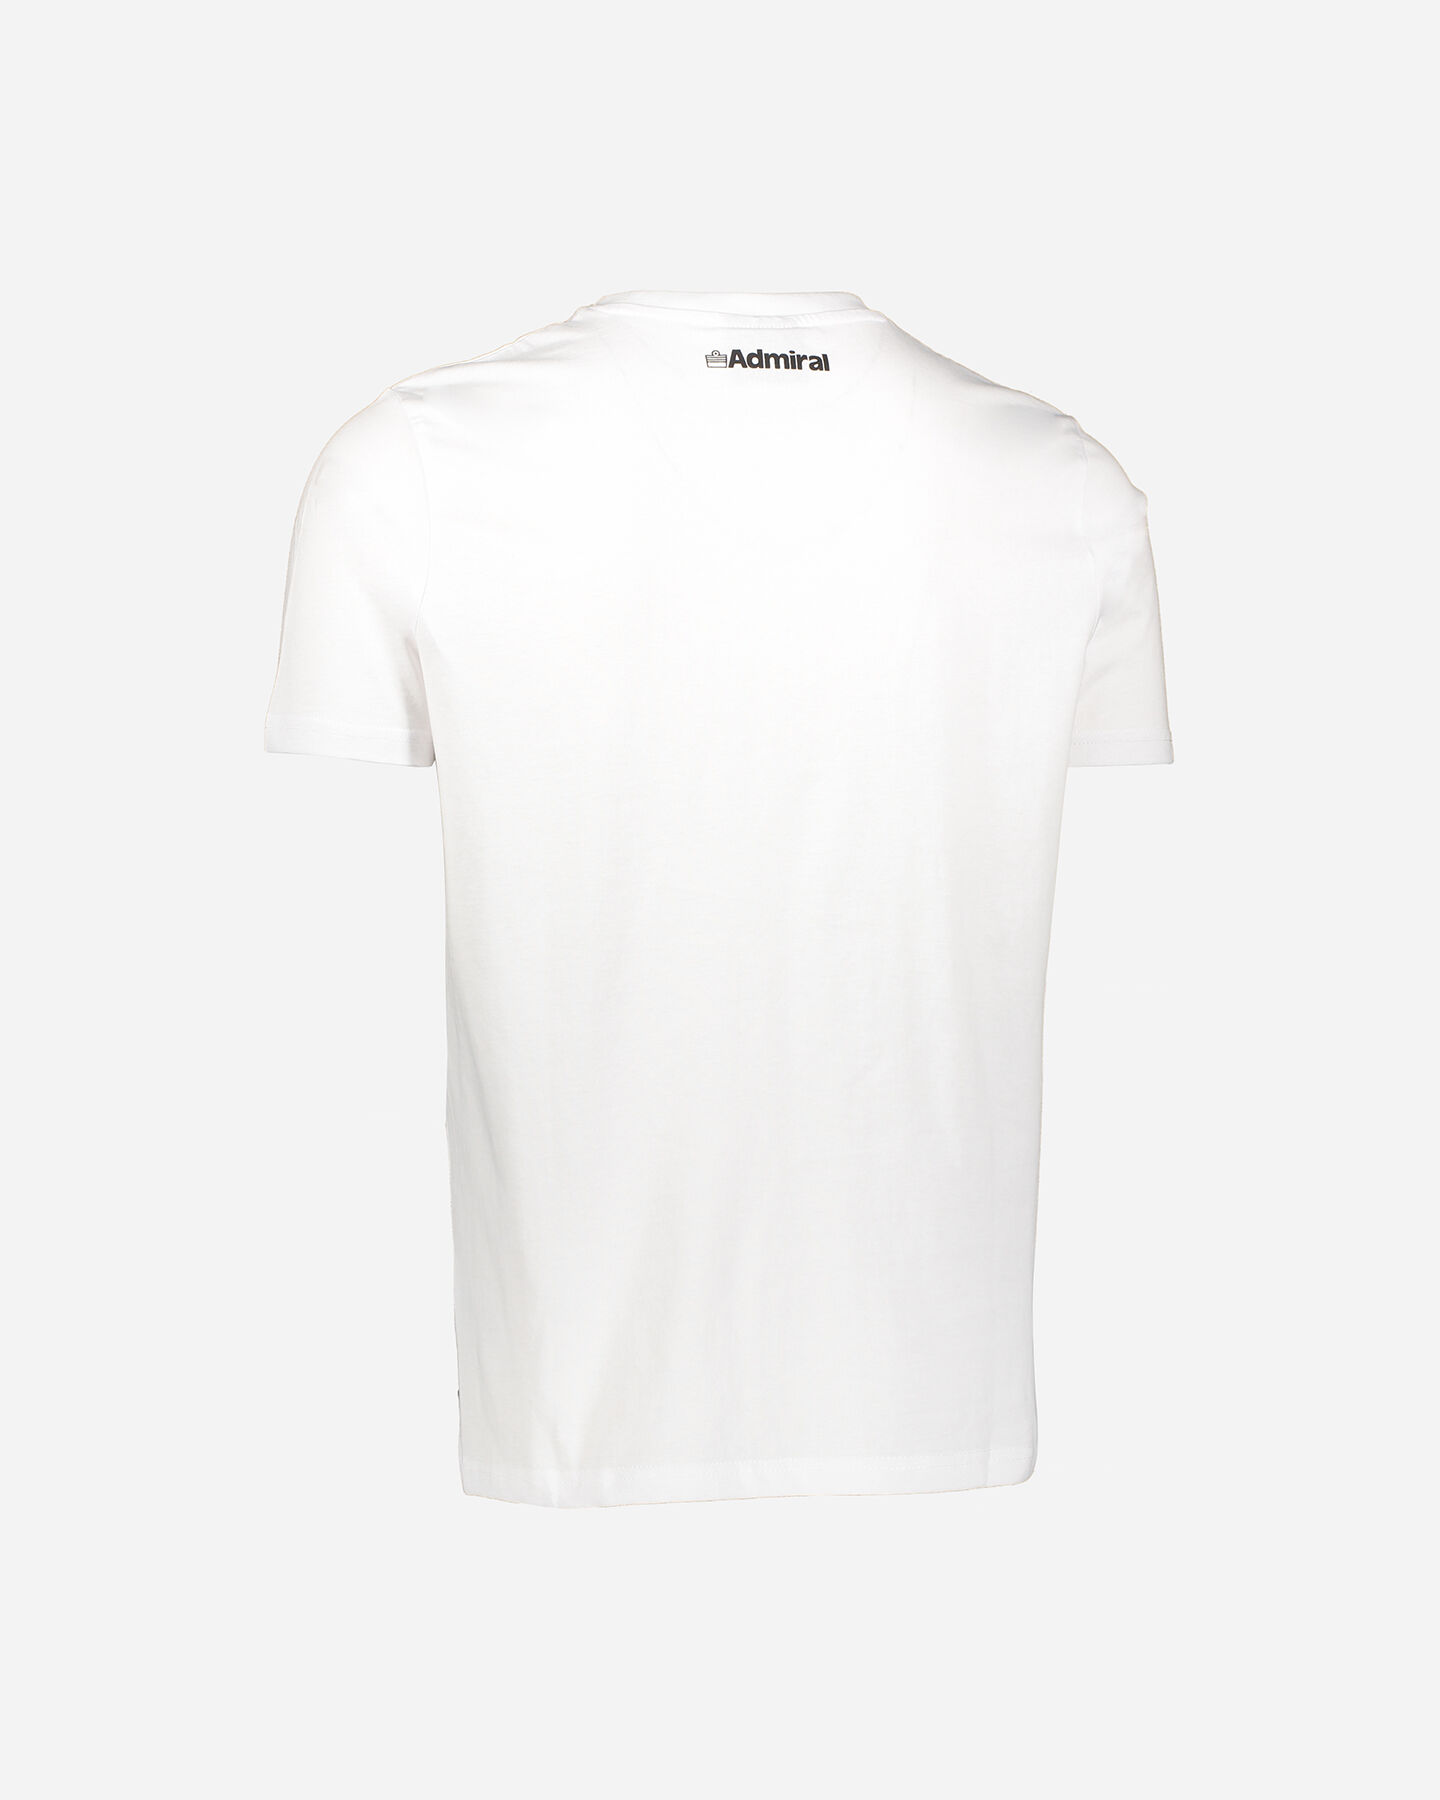  T-Shirt ADMIRAL SUMMER LOGO M S4089275|001|XS scatto 1